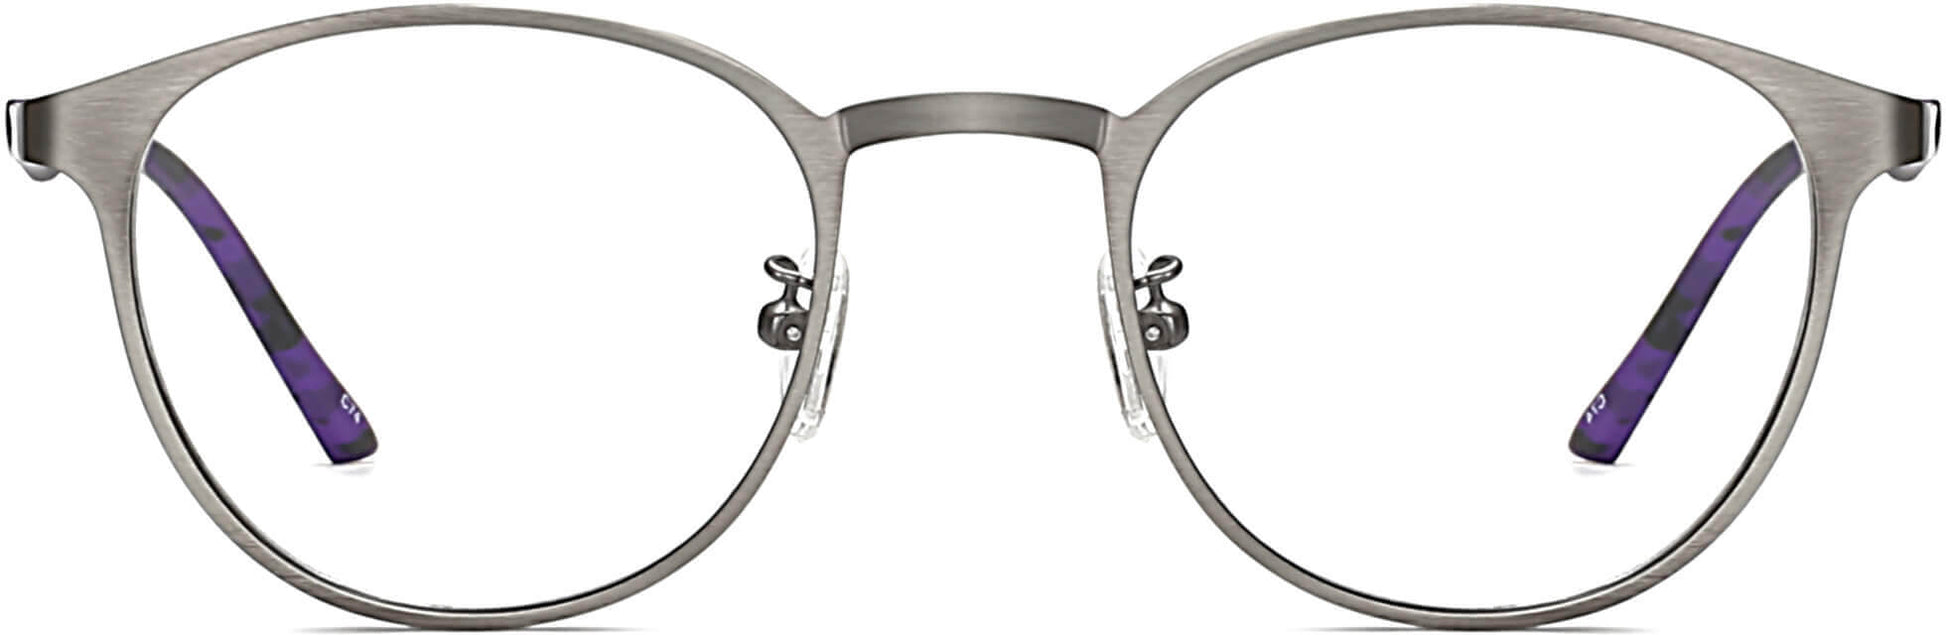 Payton Round Metal Eyeglasses from ANRRI, front view